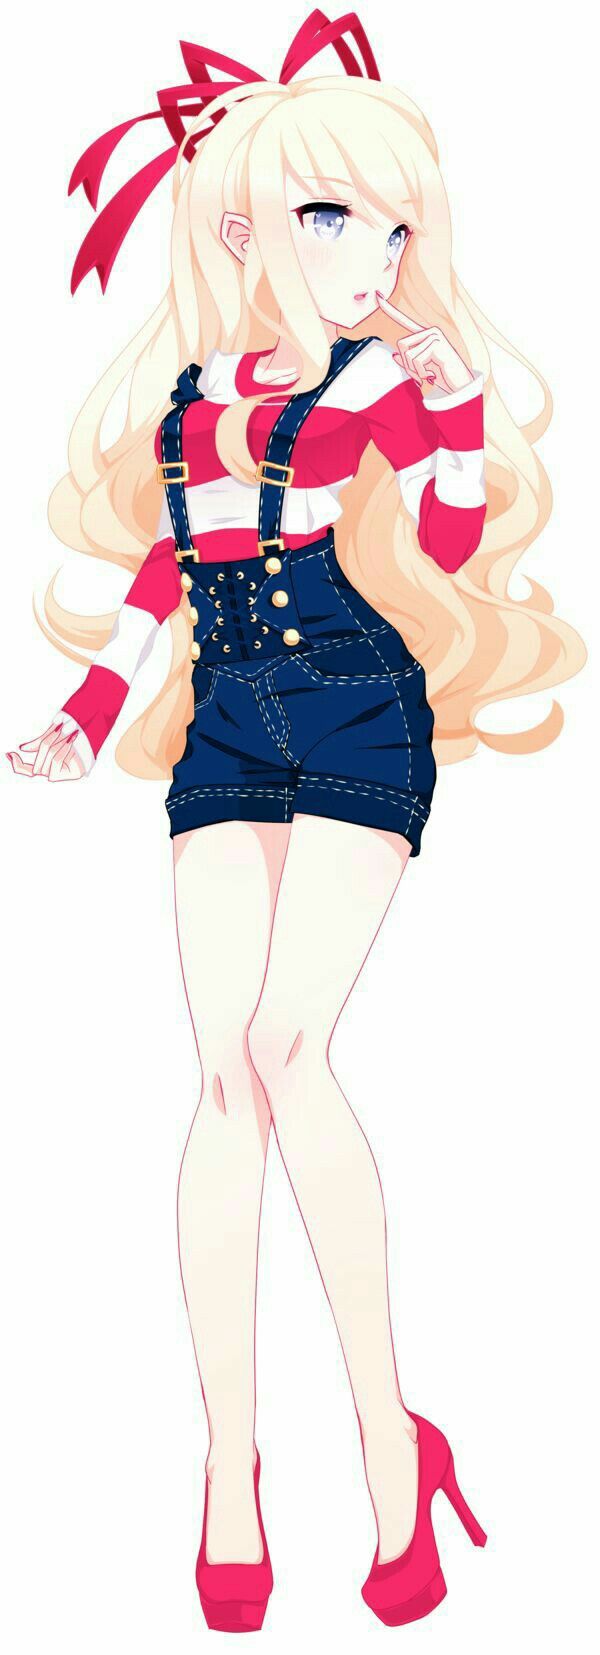 Anime girl in overalls